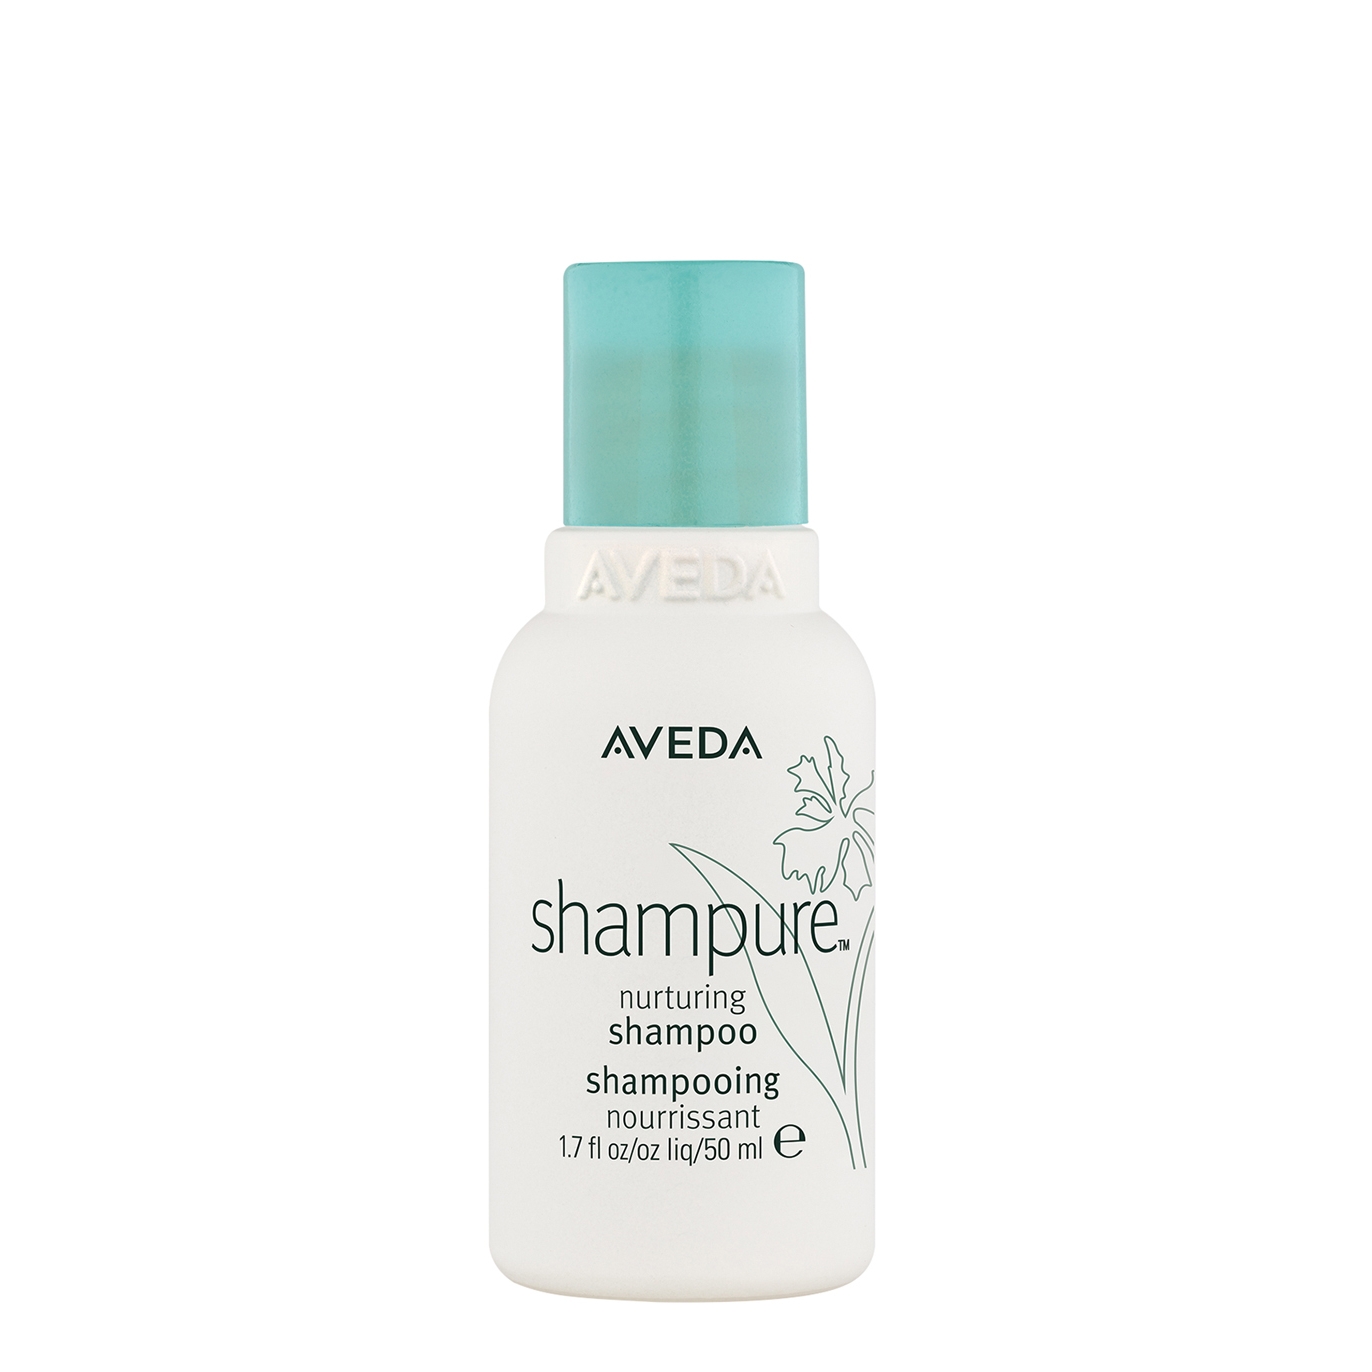 Aveda Shampure Nurturing Shampoo 50ml In White